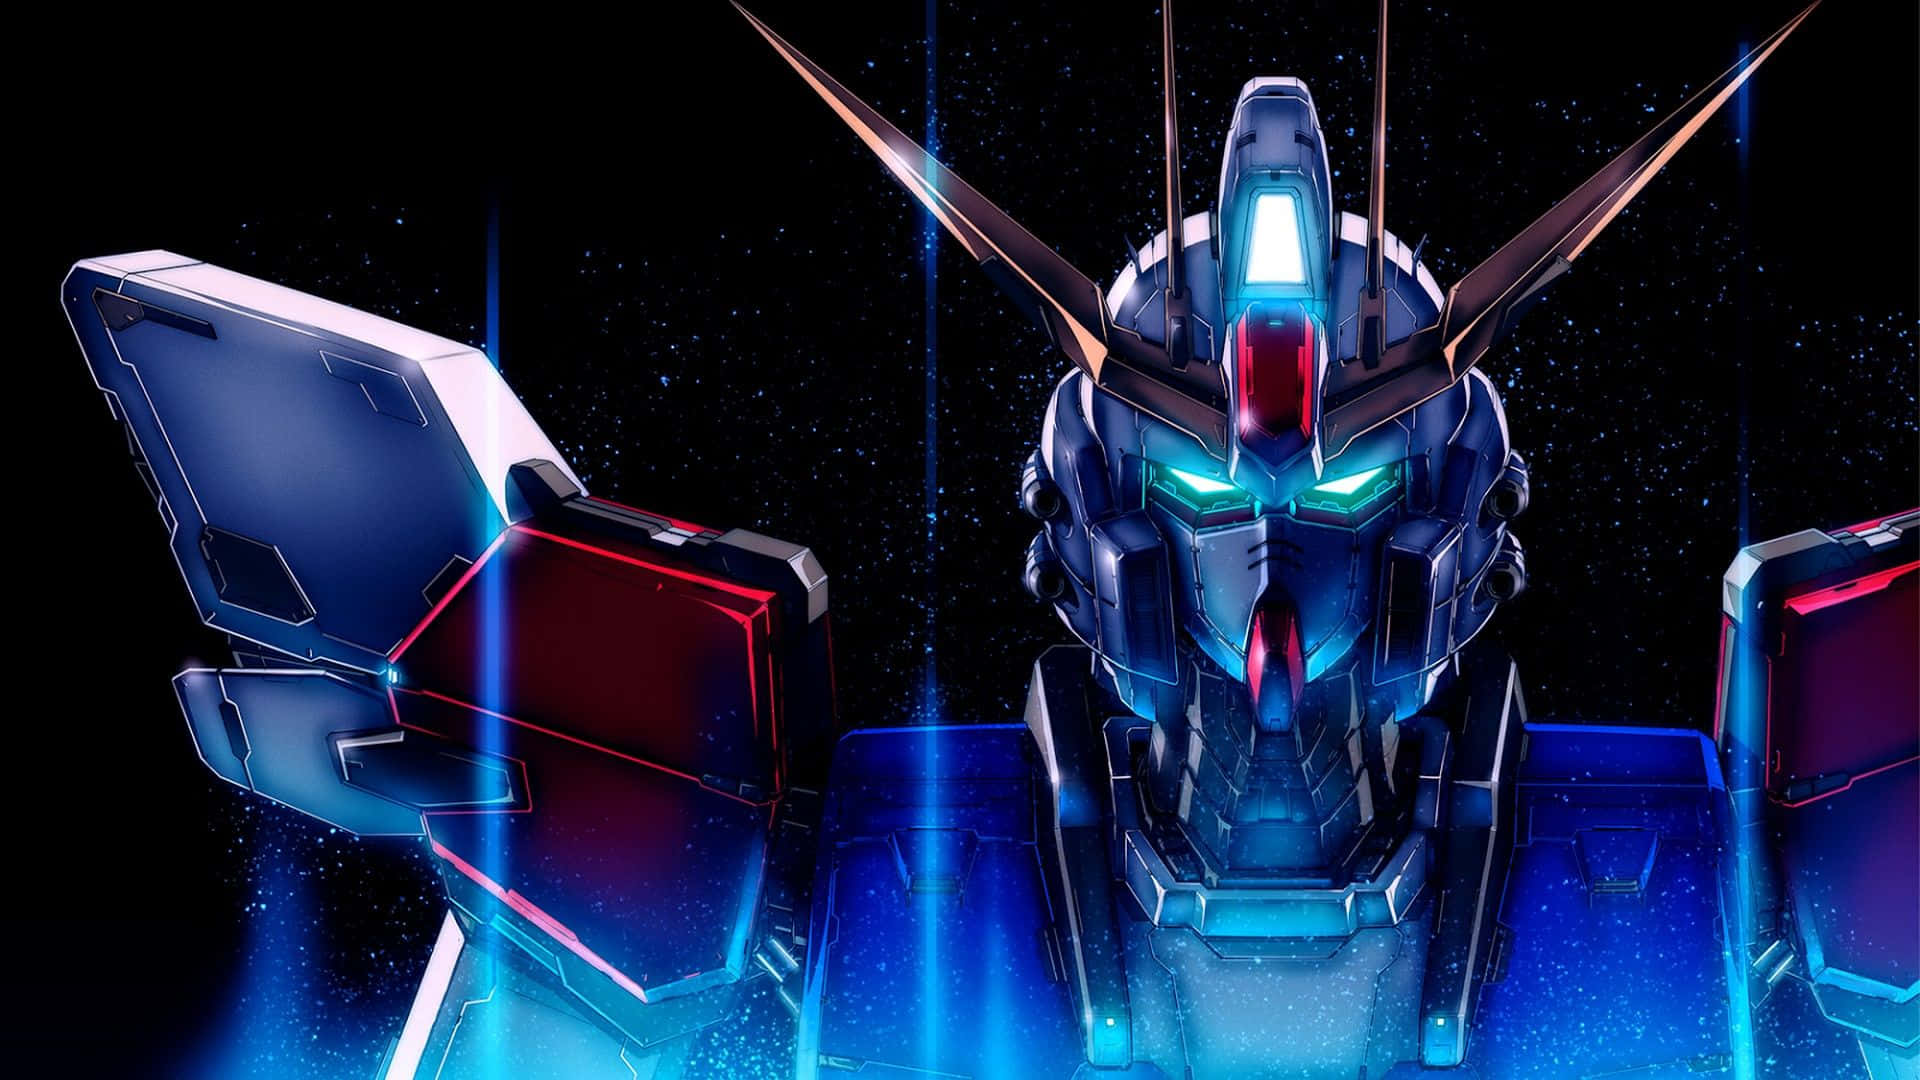 Glowing Gundam Desktop Wallpaper